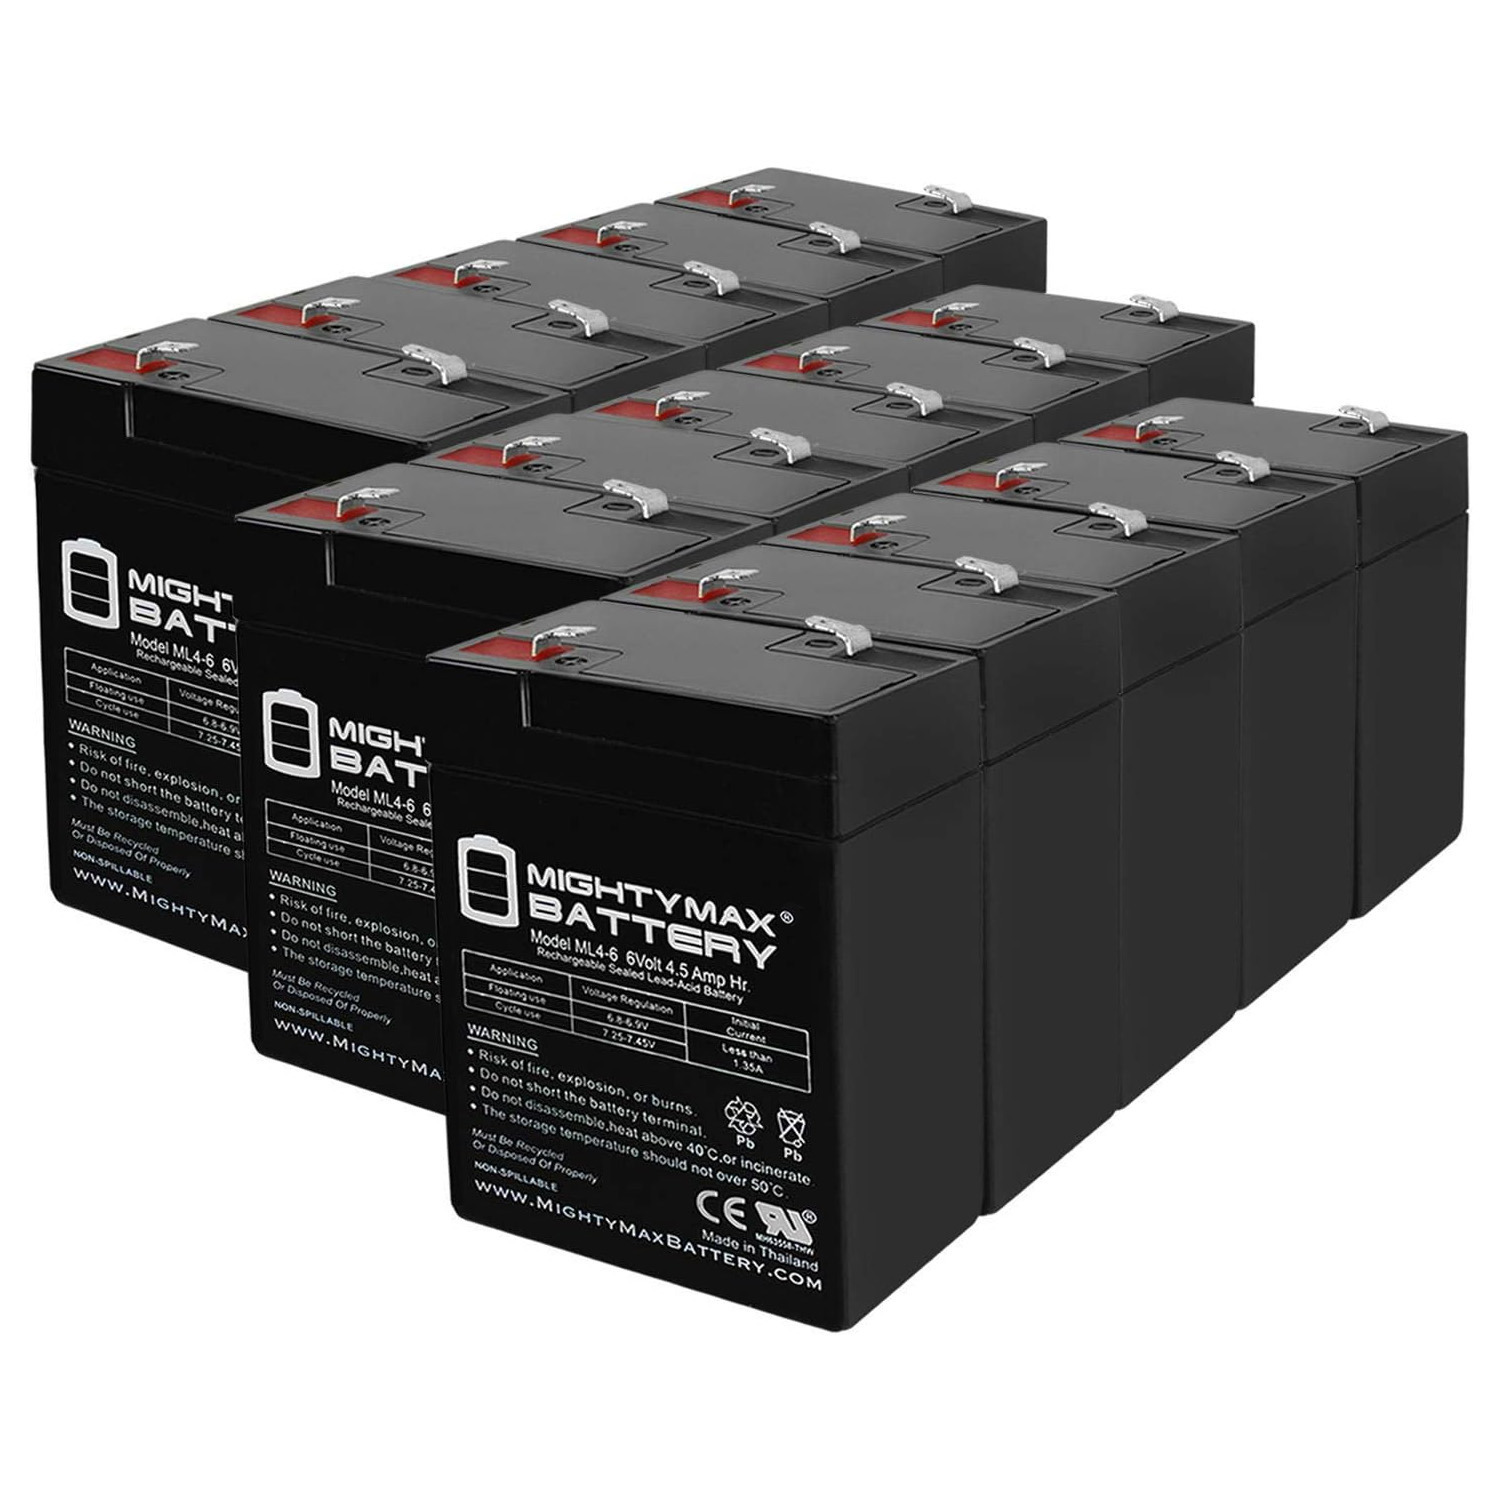 6V 4.5AH SLA Battery Replaces Cyclops Spotlight 158610 6 Million - 15 Pack